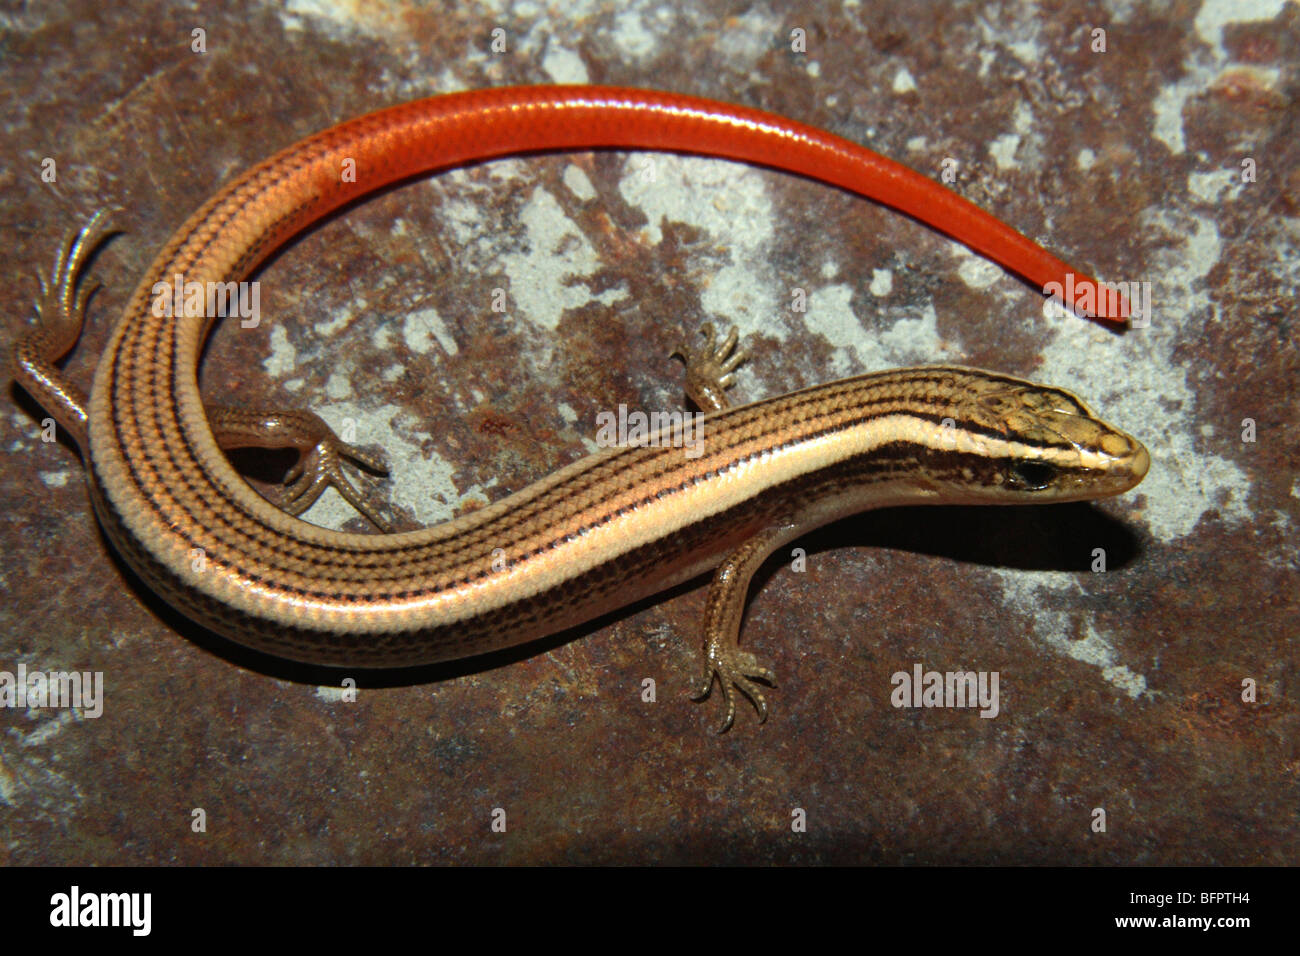 Snake Skink Lygosoma sp. Stock Photo